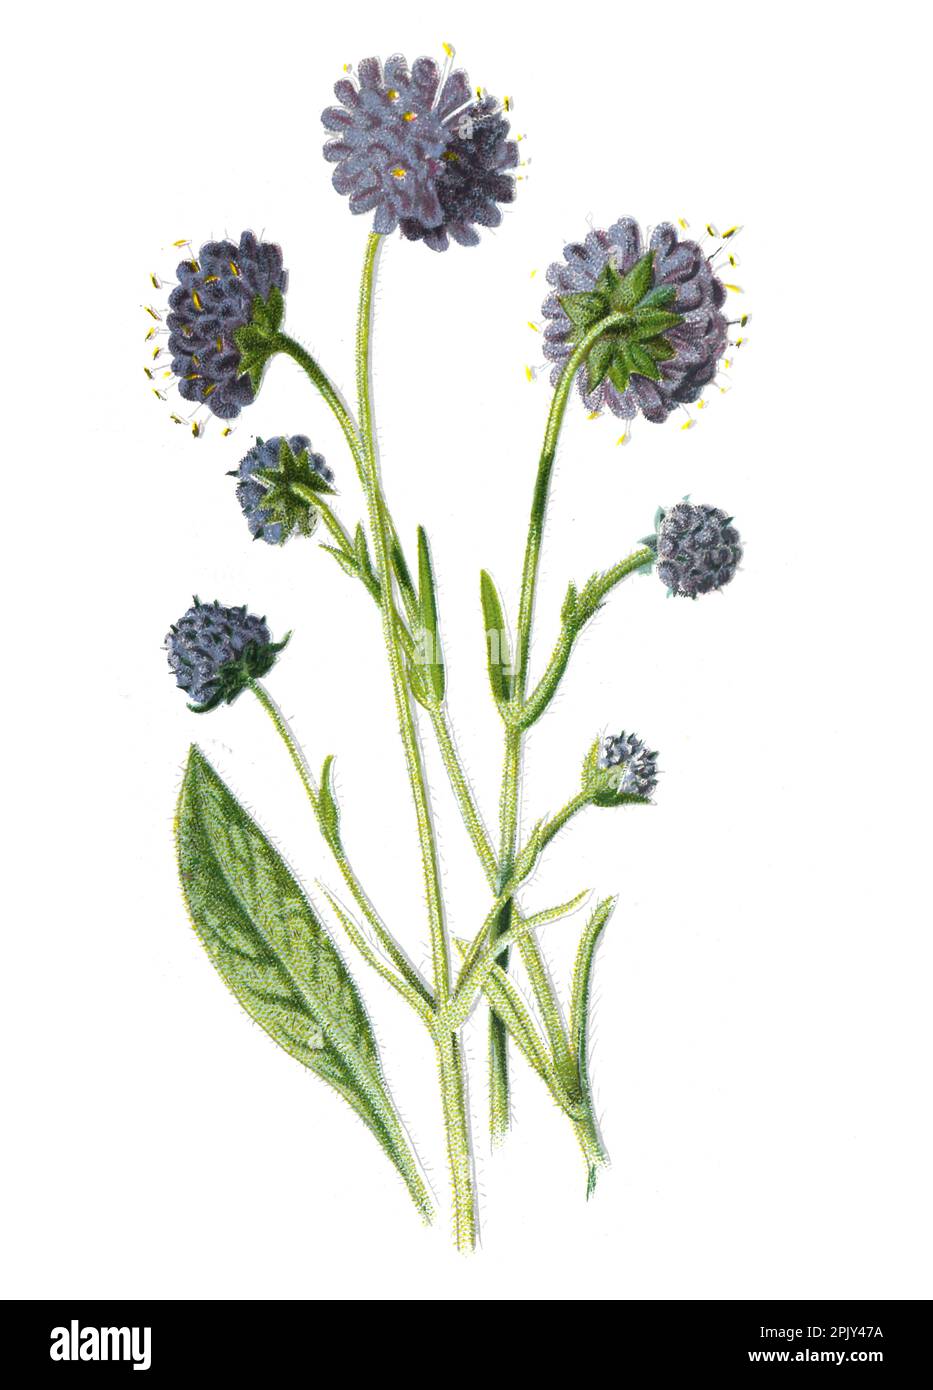 Succisa pratensis, auch bekannt als Teufelsblüte. Ordevil's bissige Familie der Caprifoliaceae Blume. Vintage Feldblumen Illustration. Stockfoto